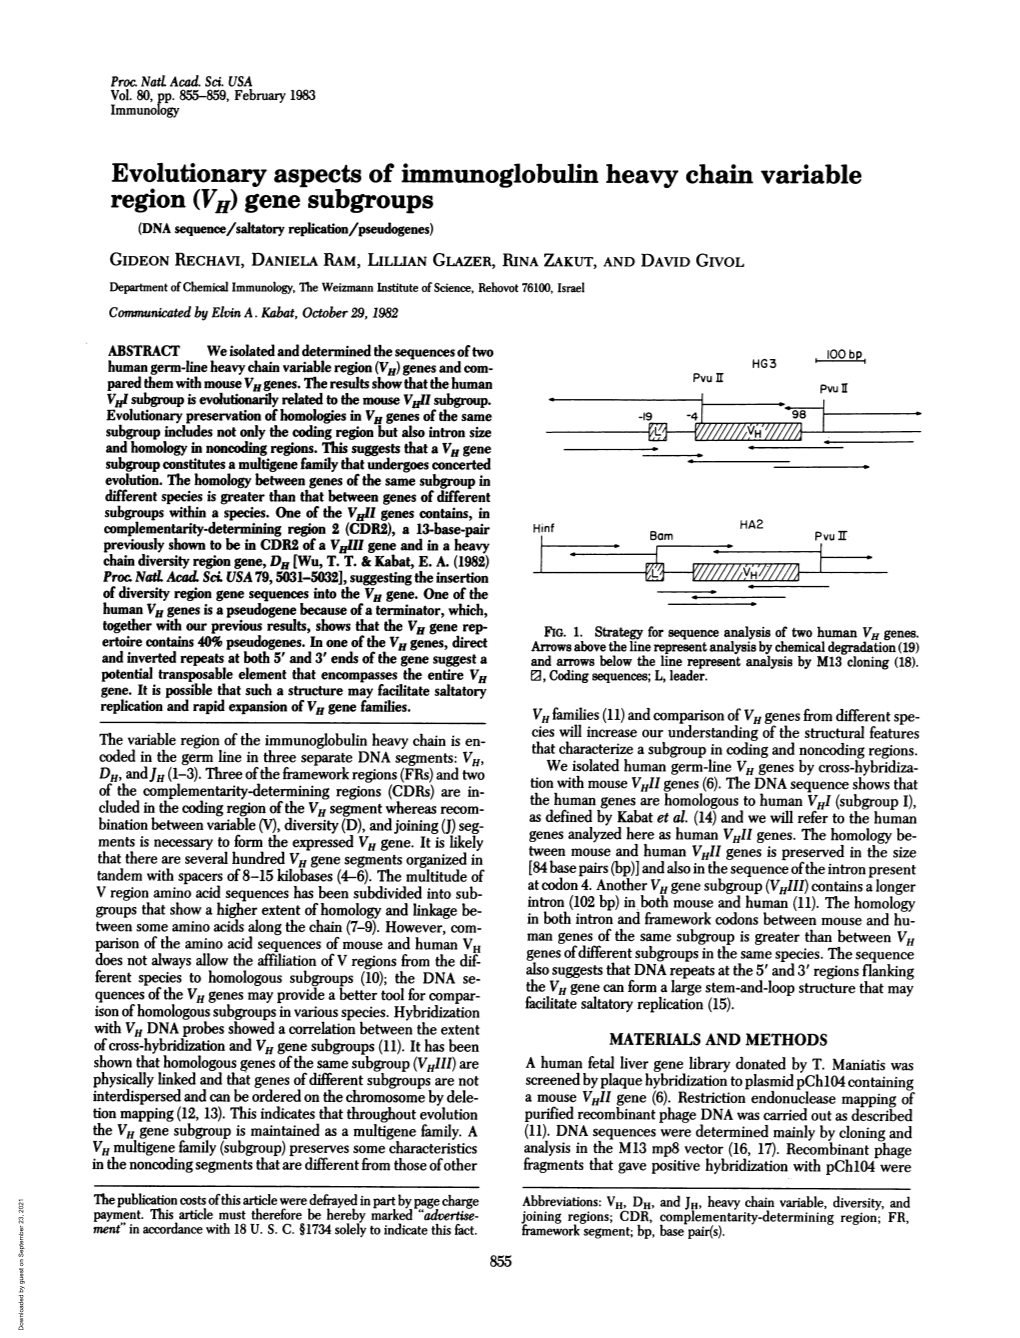 Evolutionary Aspects of Immunoglobulin Heavy Chain Variable